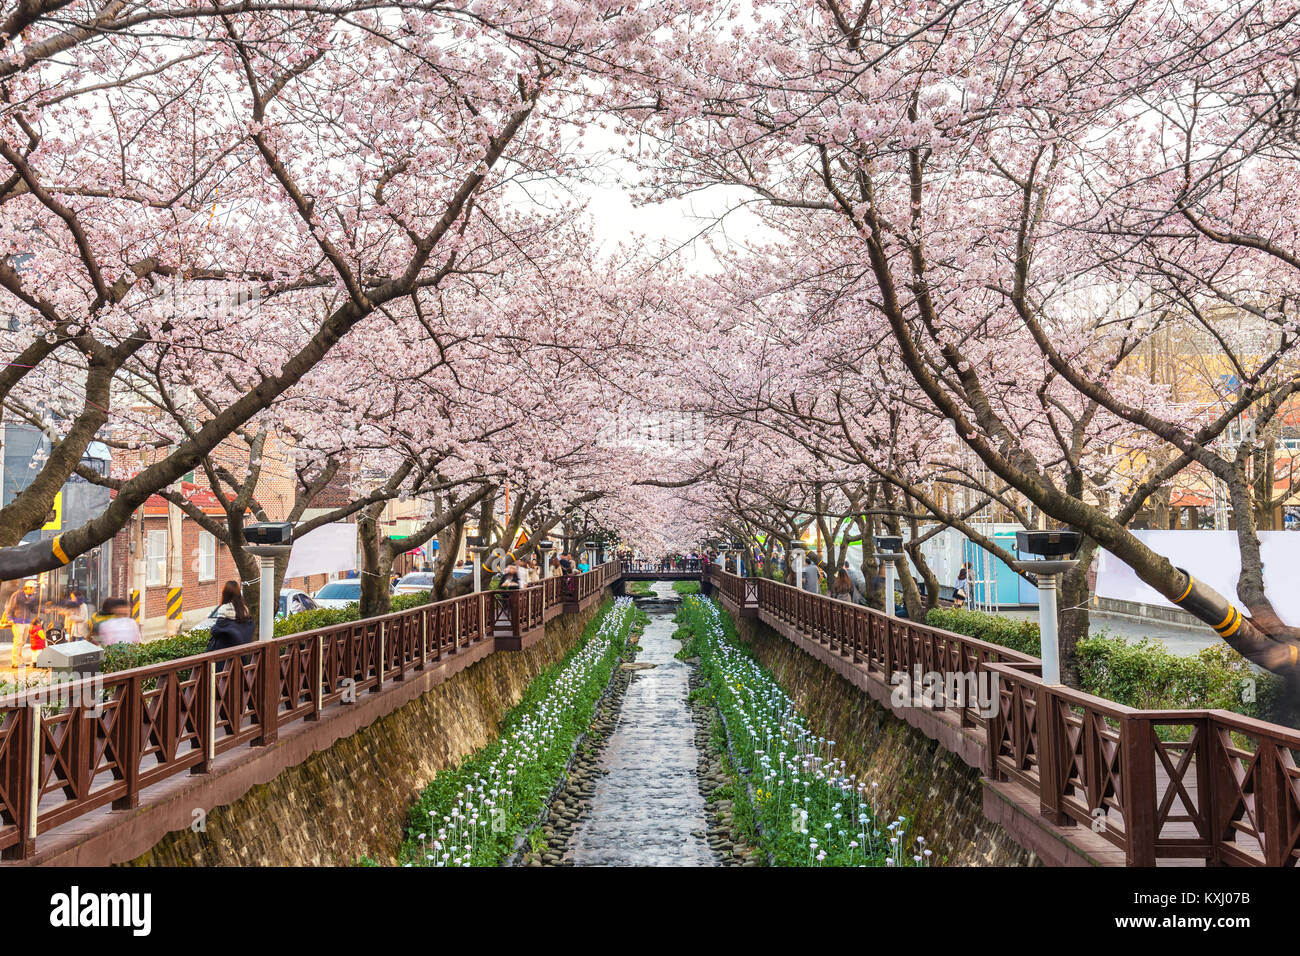 Spring Cherry Blossom Festival à Yeojwacheon Stream, Jinhae, Corée du Sud Banque D'Images